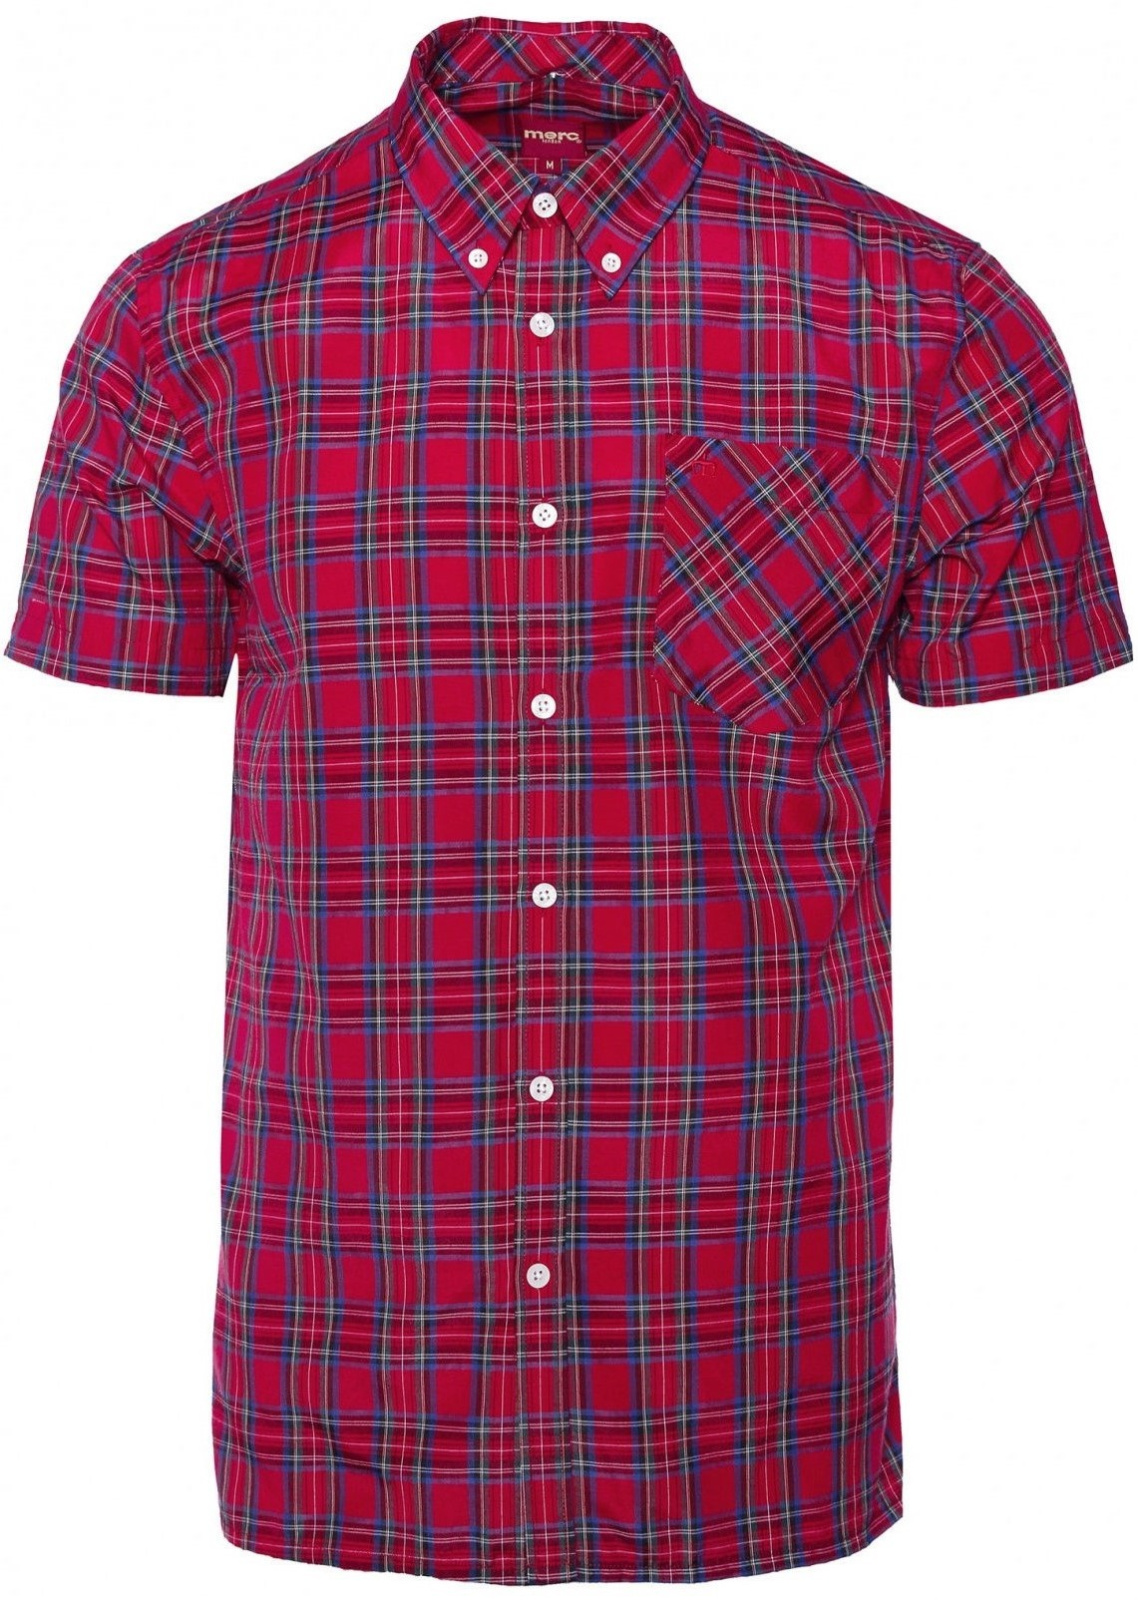 Рубашка в клетку шотландку Merc Mack, stewart red (красная), с коротким рукавом